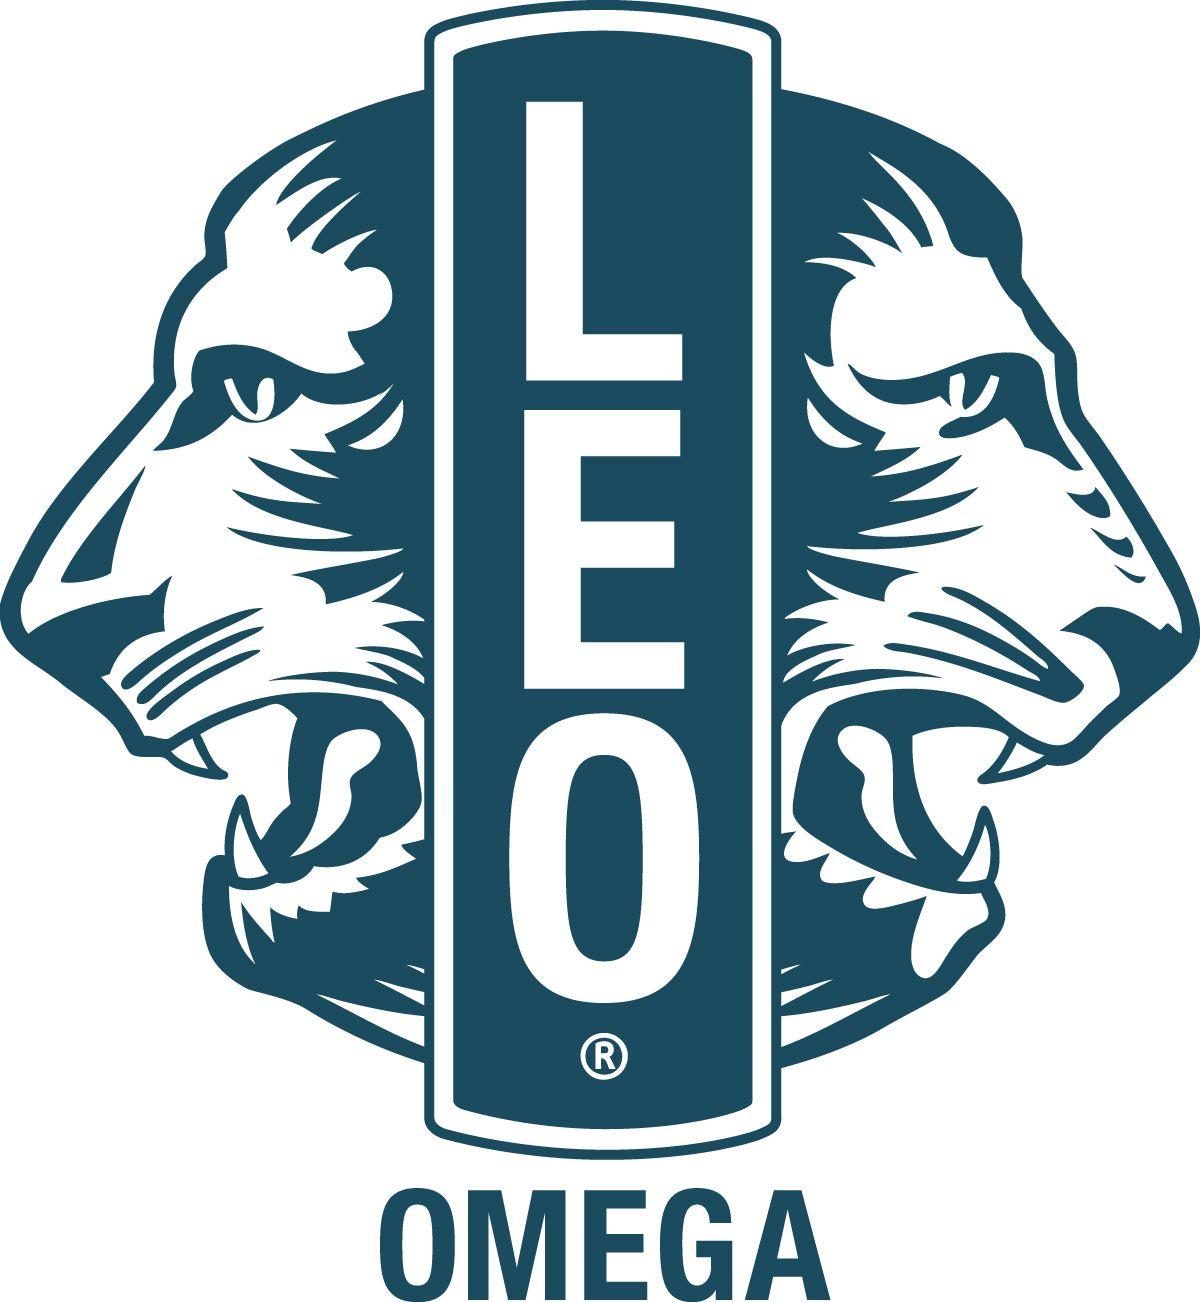 Club Logo - Logos and Emblems. Lions Clubs International